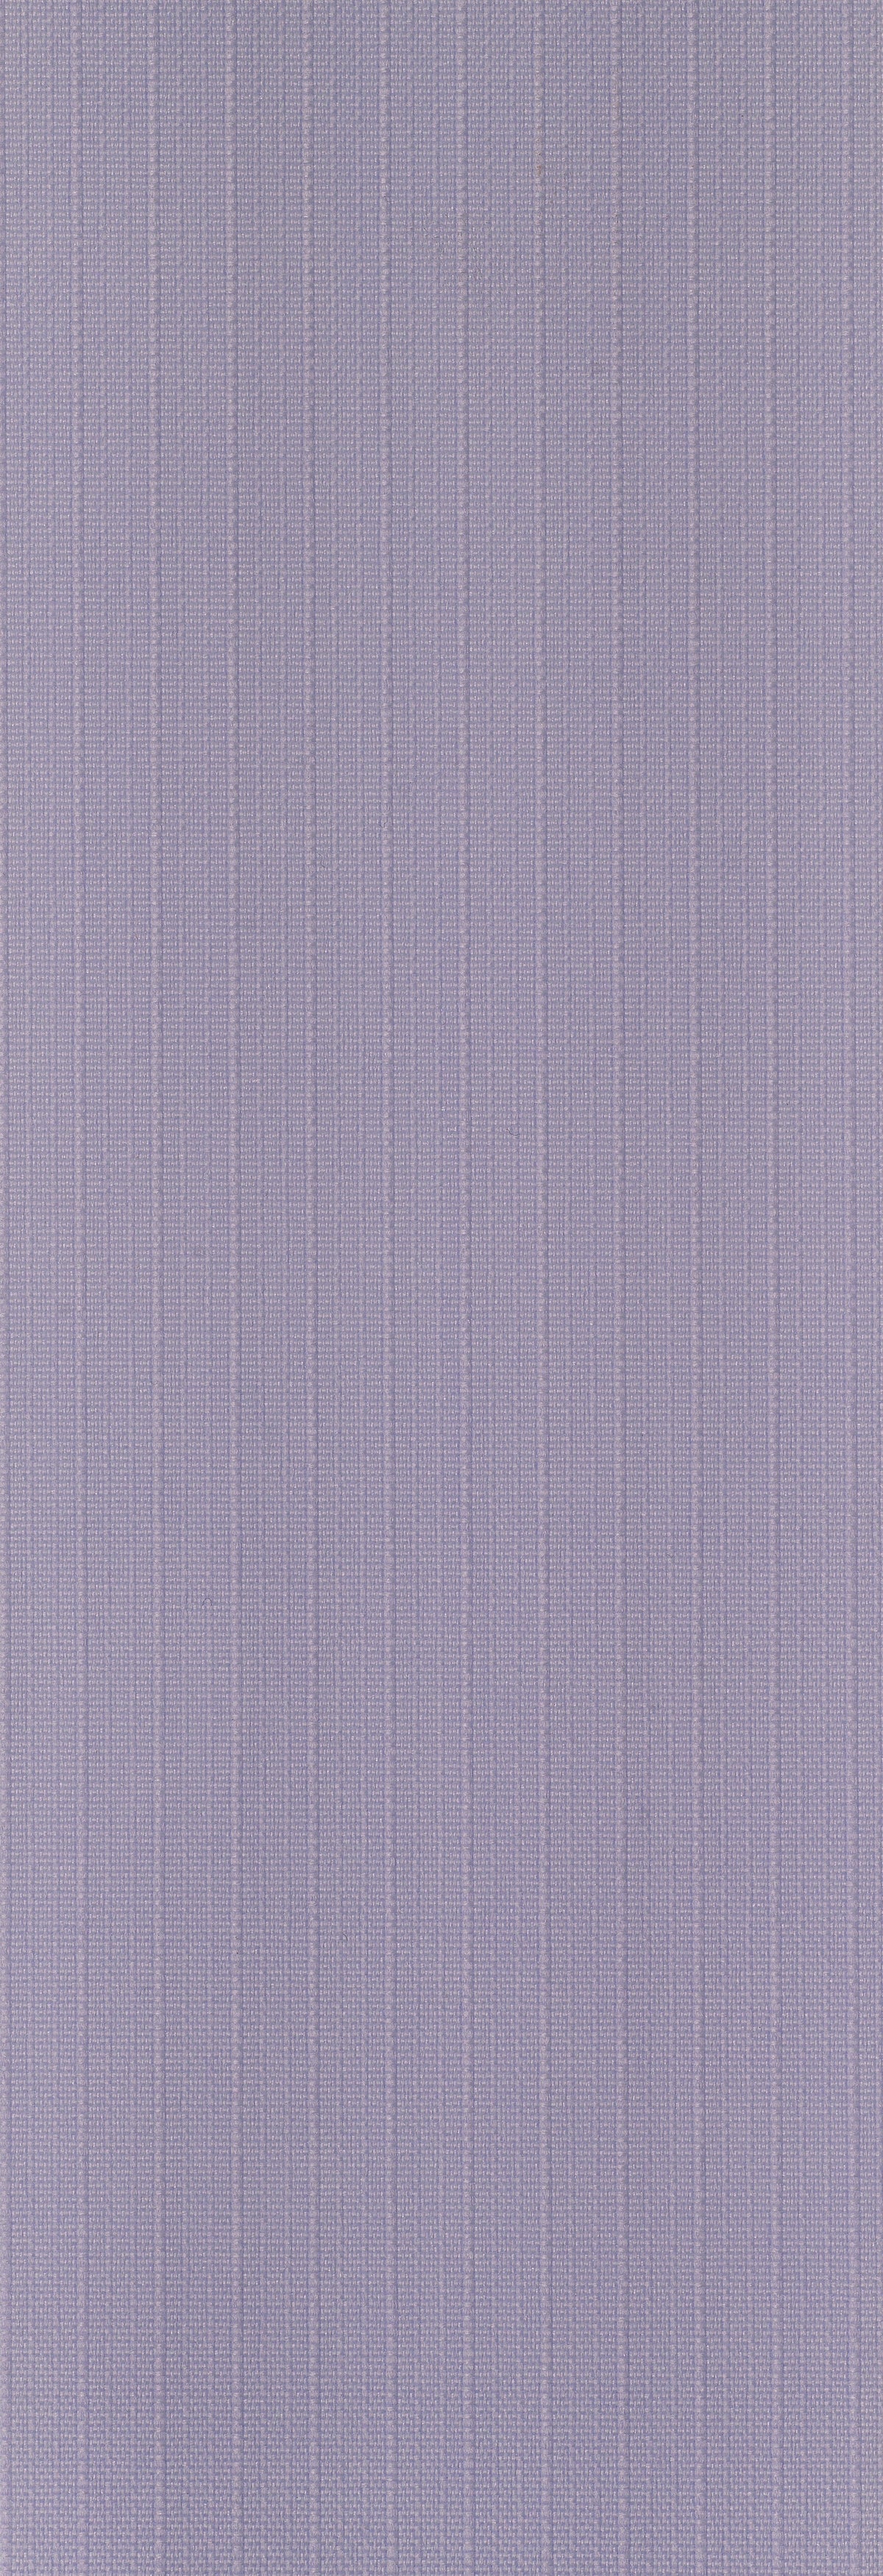 Stripe Lavender Vertical Replacement Blind Slat